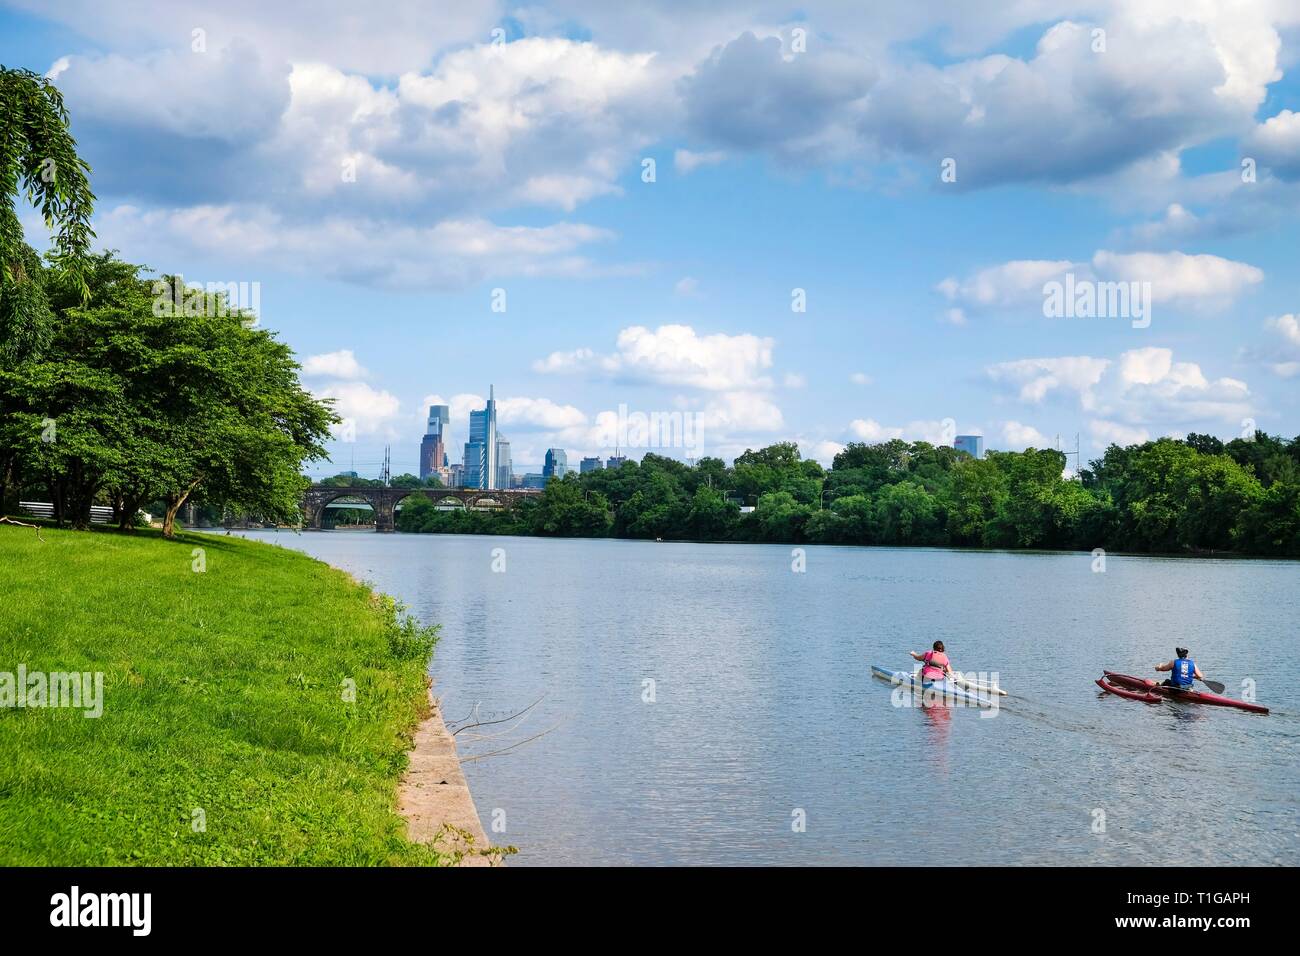 Friends Kayaking on Schuylkill River in Fairmount Park with Skyline in background, Philadelphia, Pennsylvania. Stock Photo